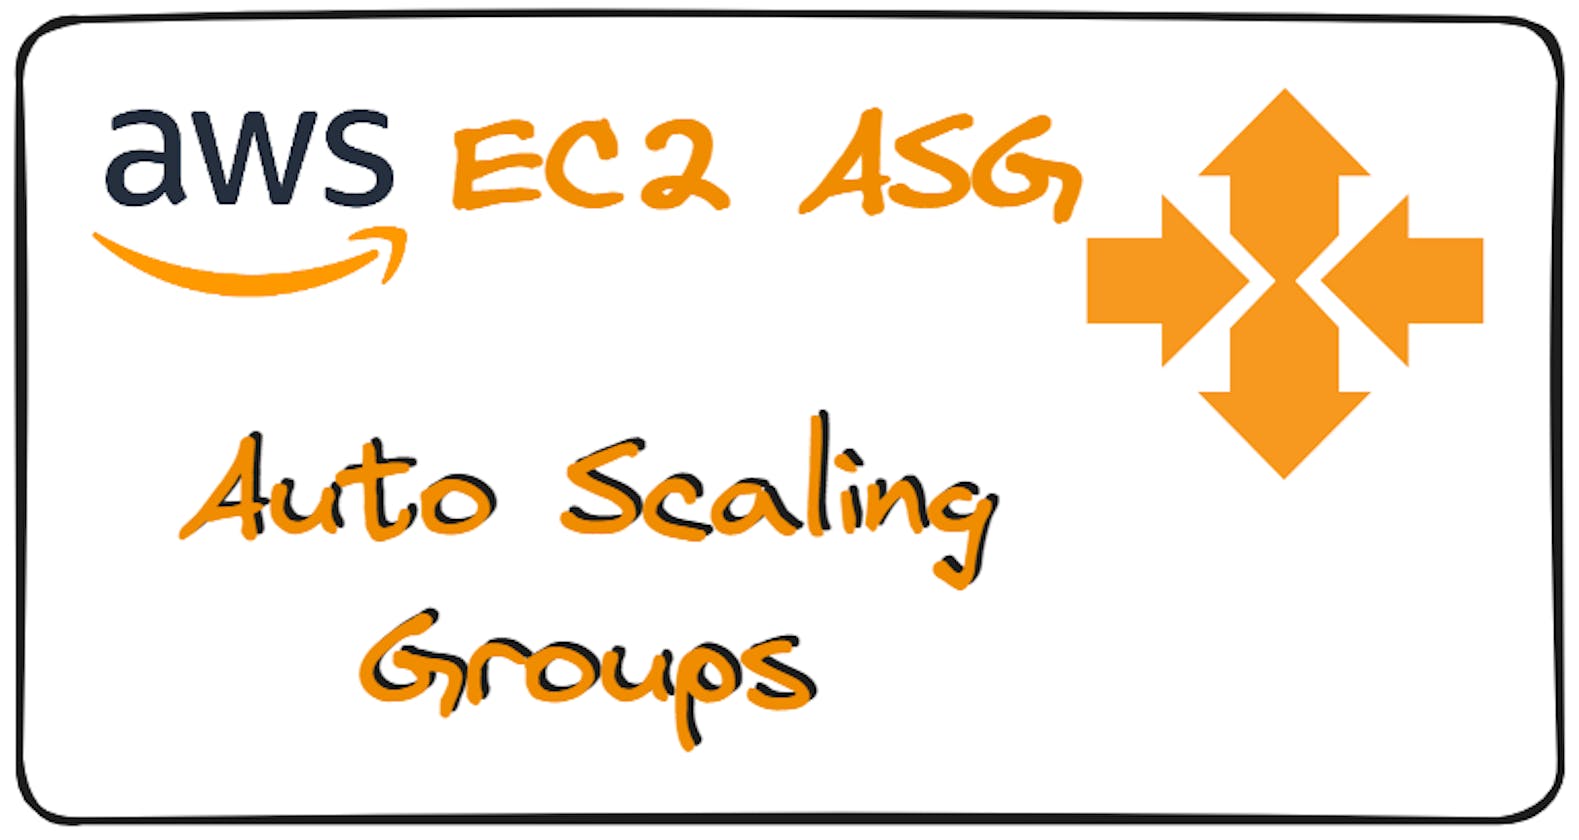 AWS EC2 ASG (Auto Scaling Groups)